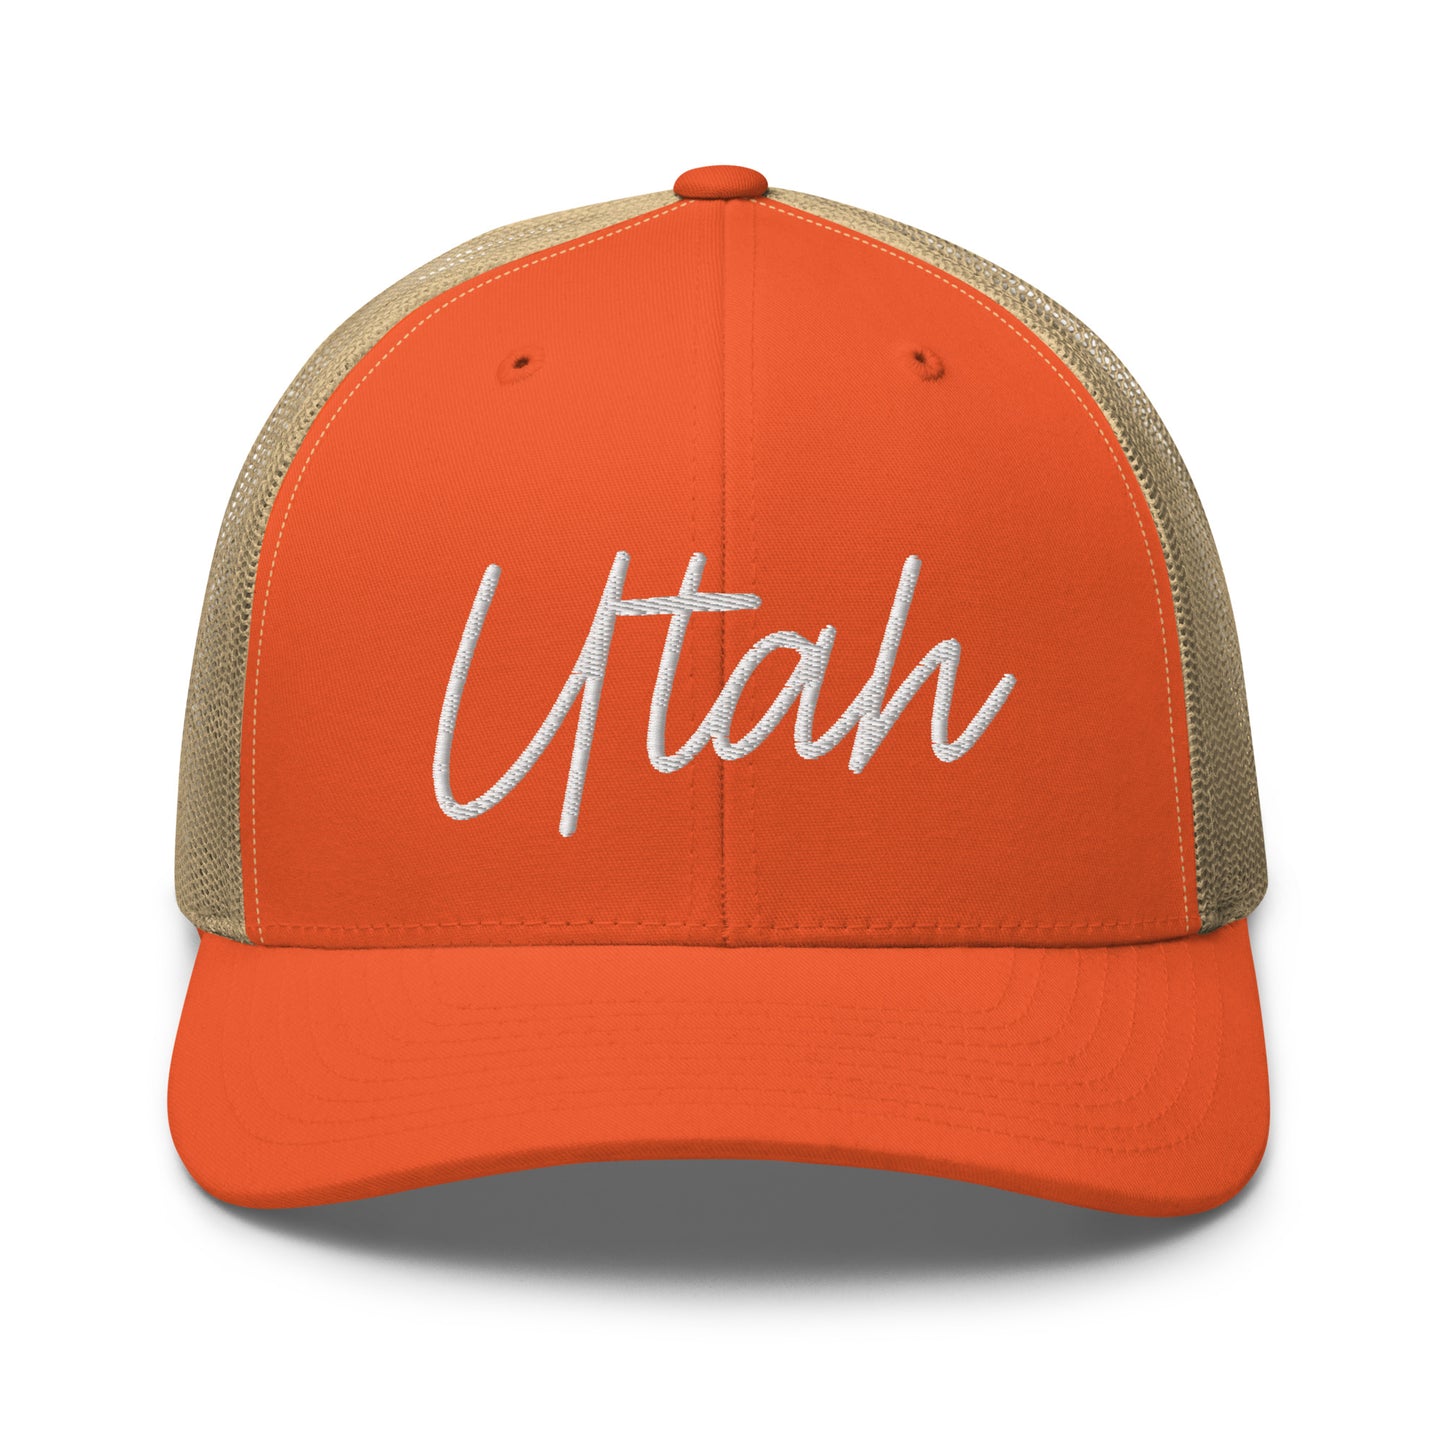 Utah Retro Script Mid 6 Panel Snapback Trucker Hat